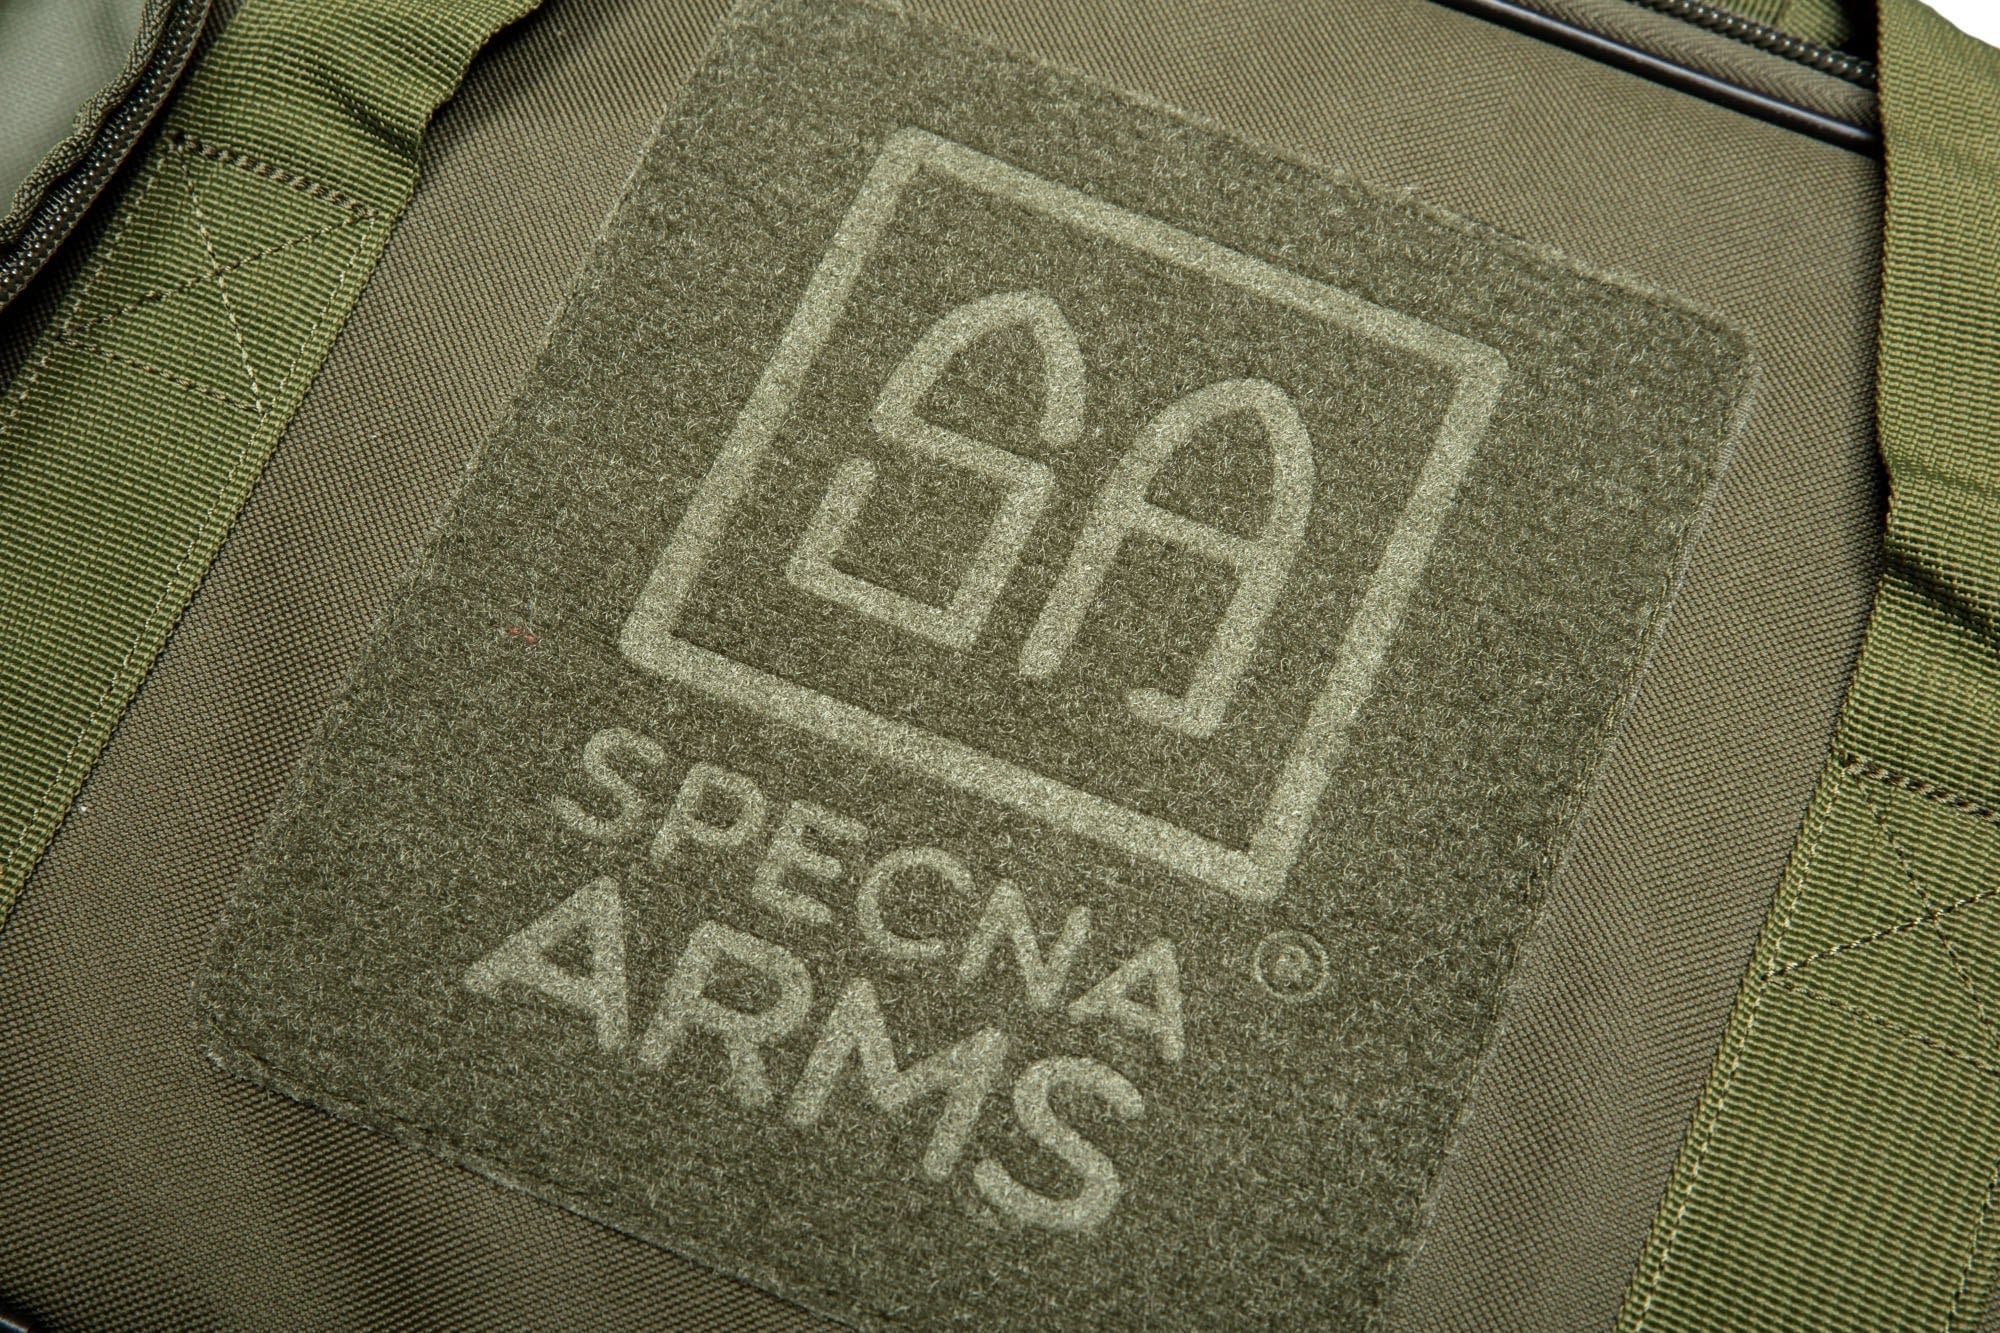 Specna Arms Gun Bag V1 - 98cm - Oliva